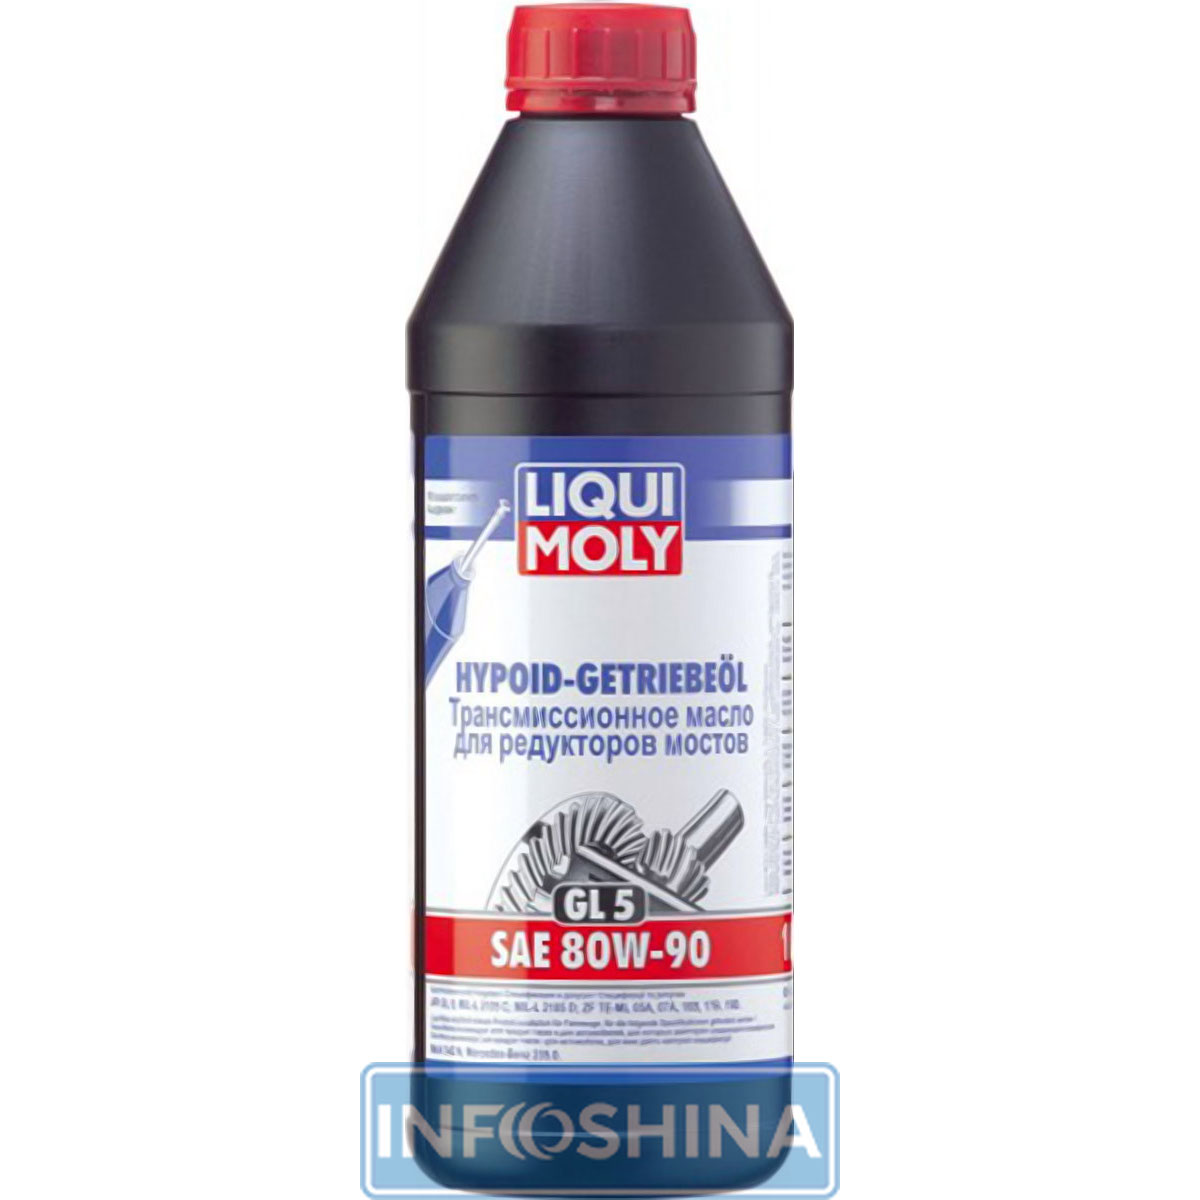 Купить масло Liqui Moly Hypoid-Getriebeoil GL-5 80W-90 (1л)